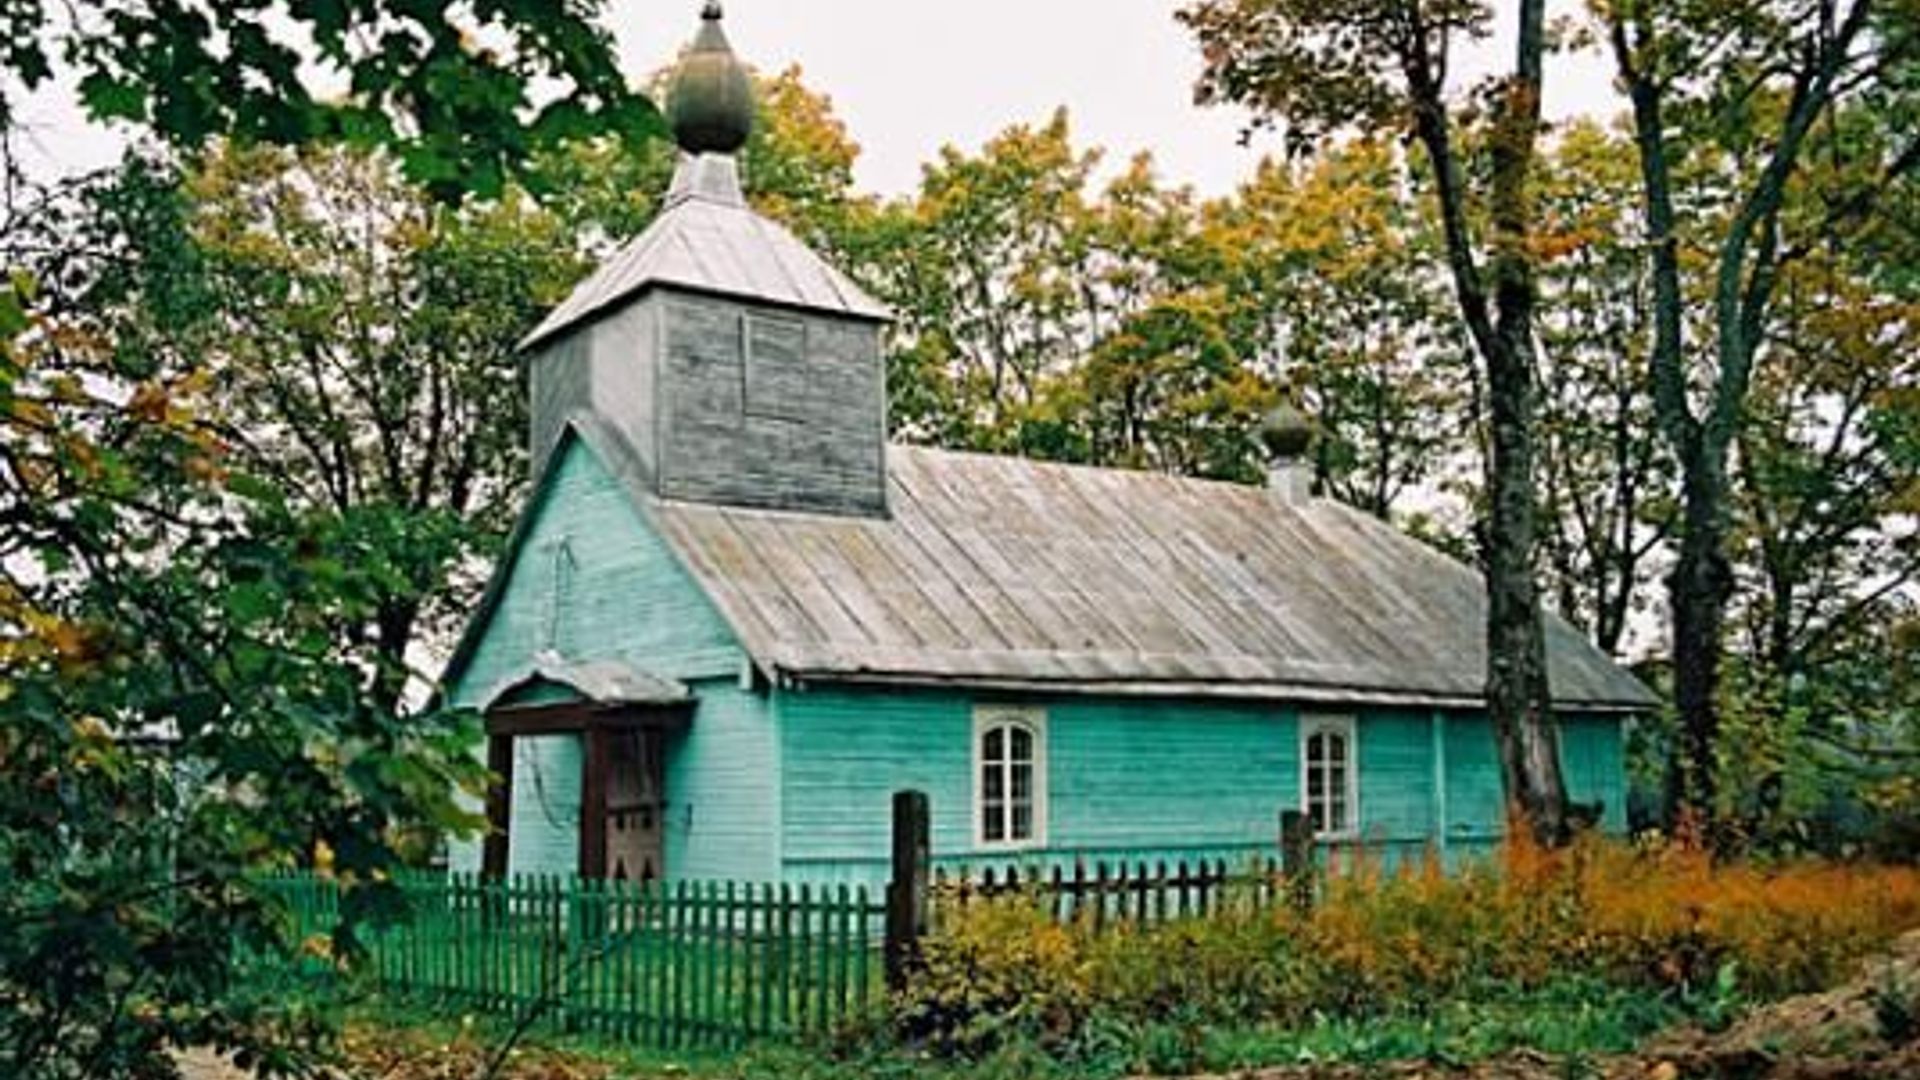 Daniliškės Old Believers Church